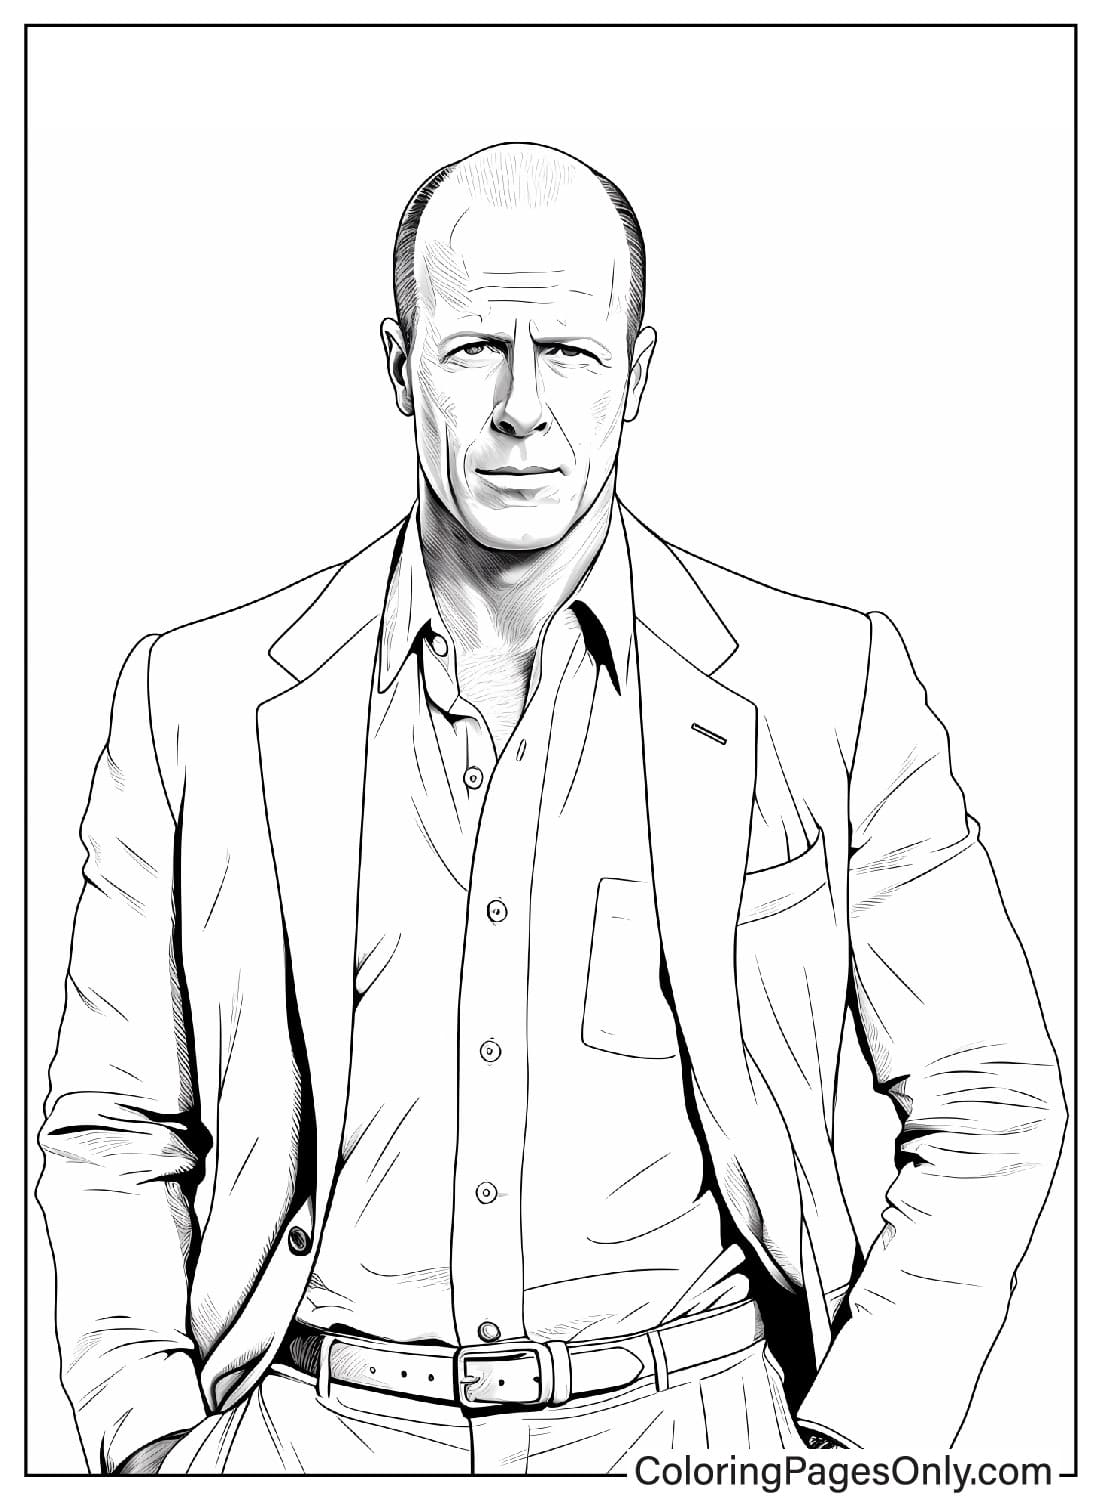 Página para colorear de Bruce Willis gratis de Bruce Willis